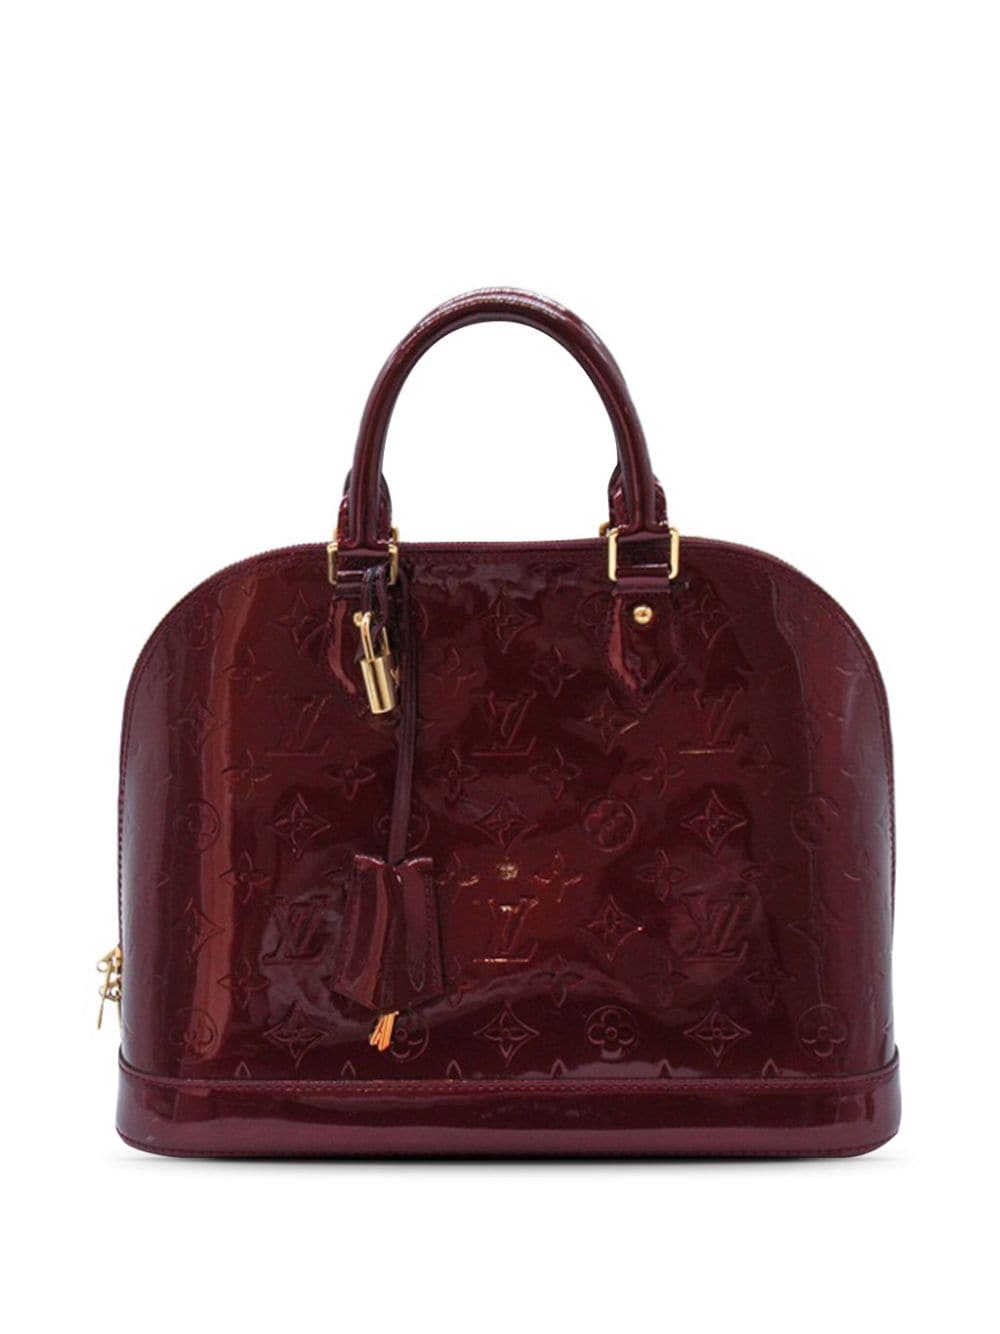 Pre-owned Louis Vuitton 2010 Monogram Vernis Alma Pm Handbag In Red